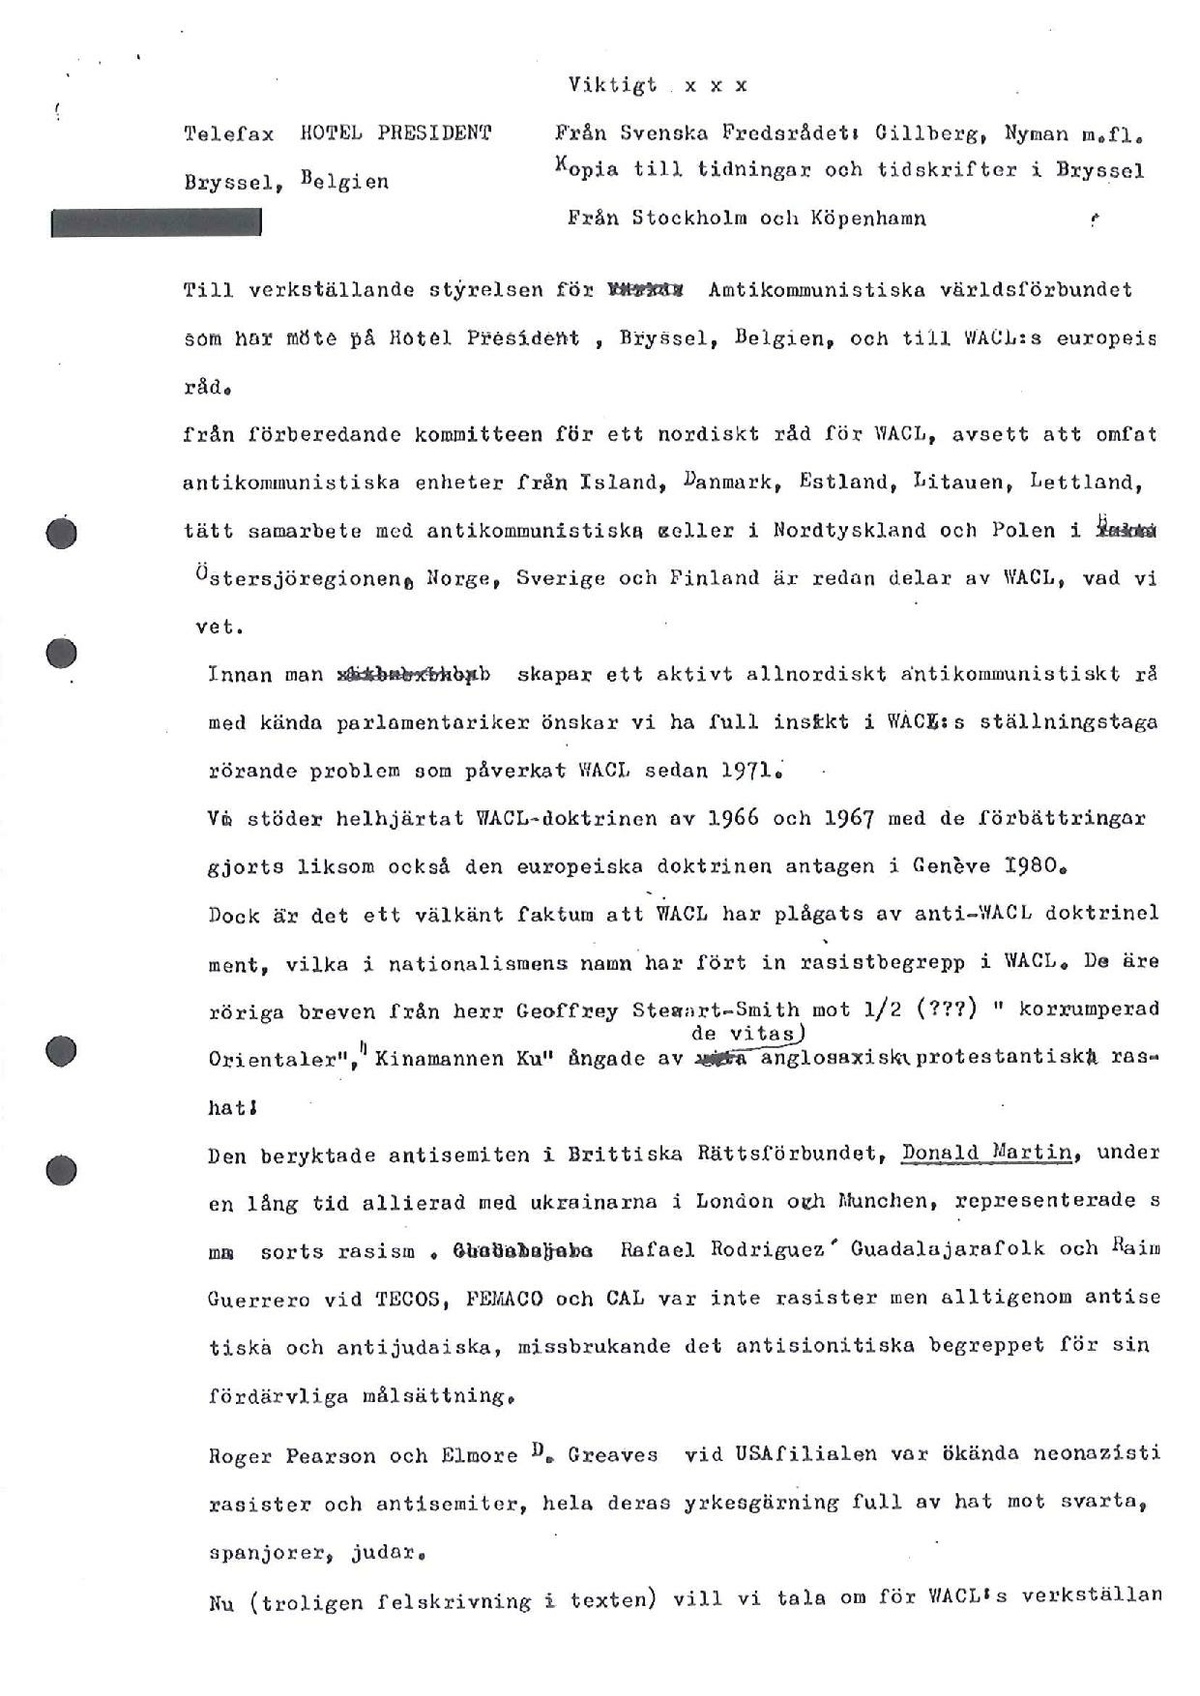 Pol-1990-08-07 HA13216-00 brev-WACL-Belgien-artikel-de-Telegraafsidorna 1-20.pdf